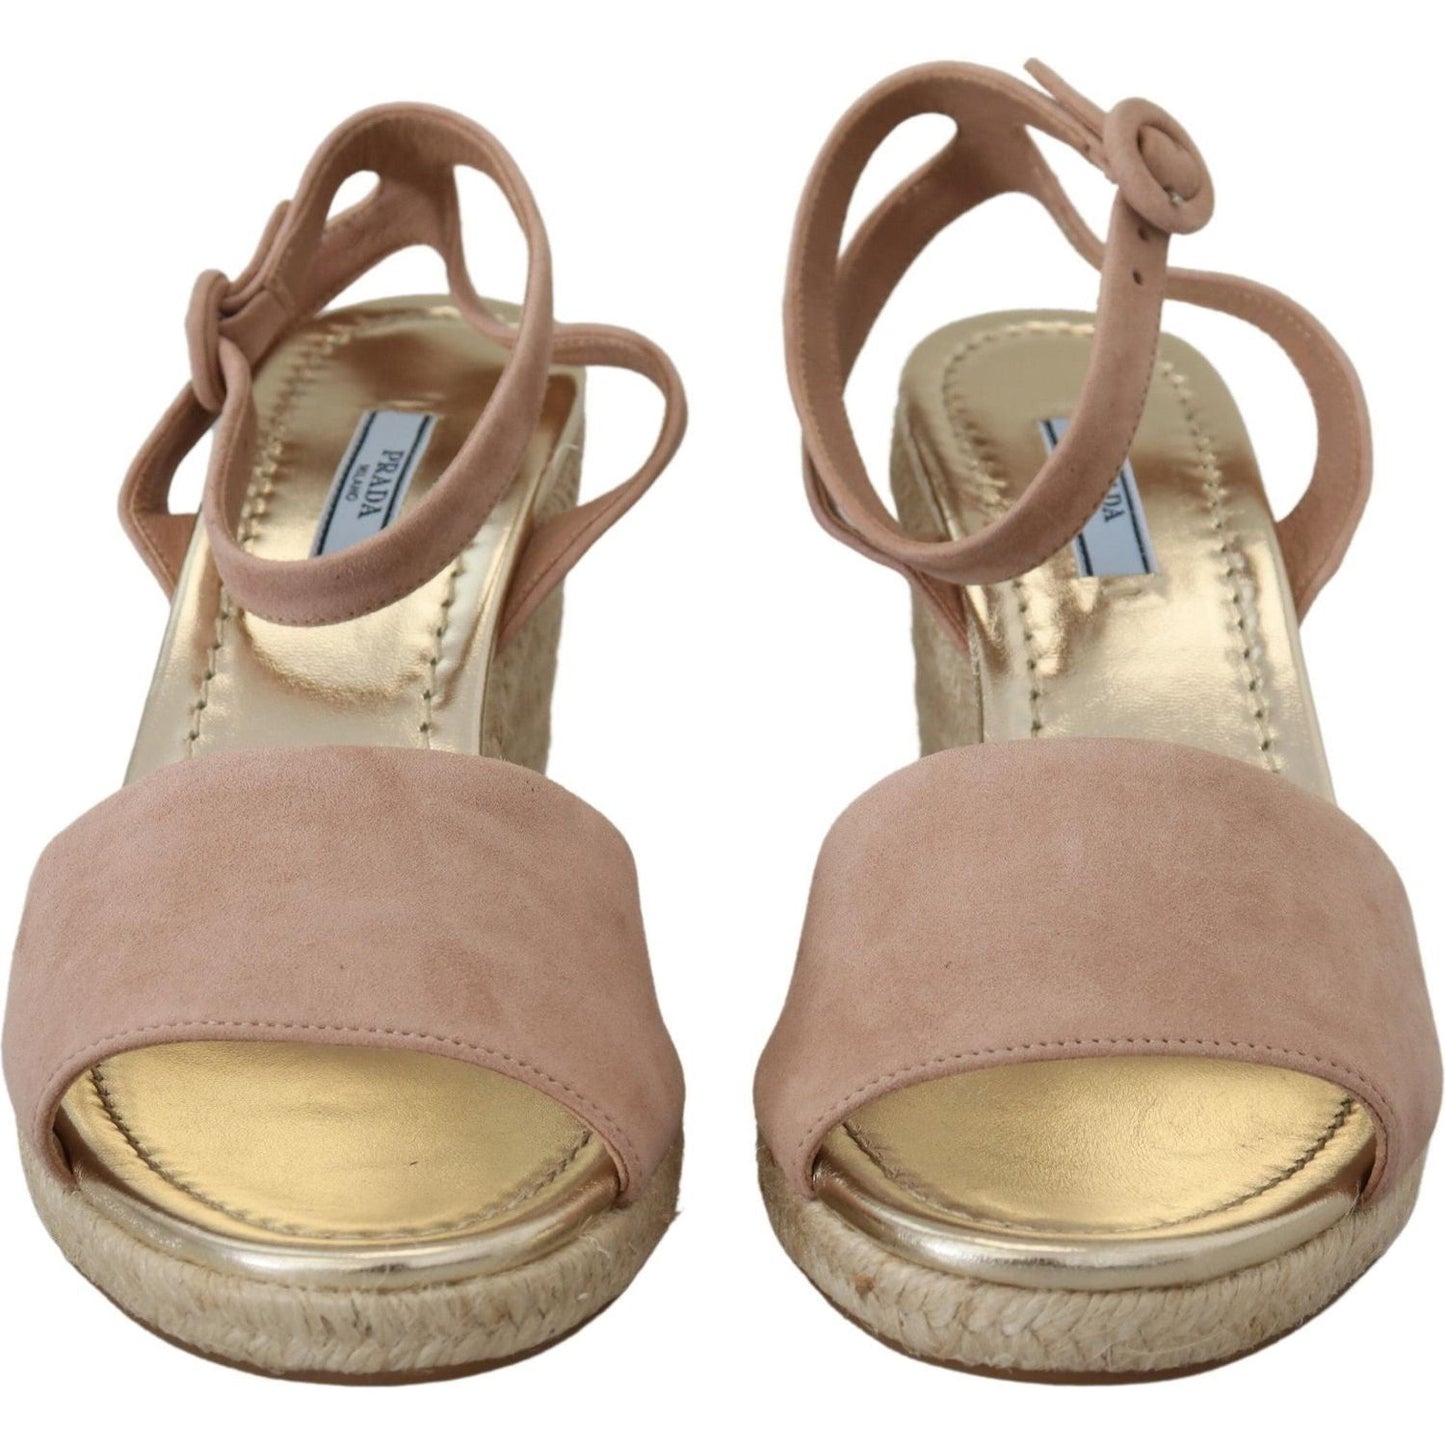 Prada Elegant Suede Ankle Strap Wedge Sandals pink-suede-leather-ankle-strap-sandals